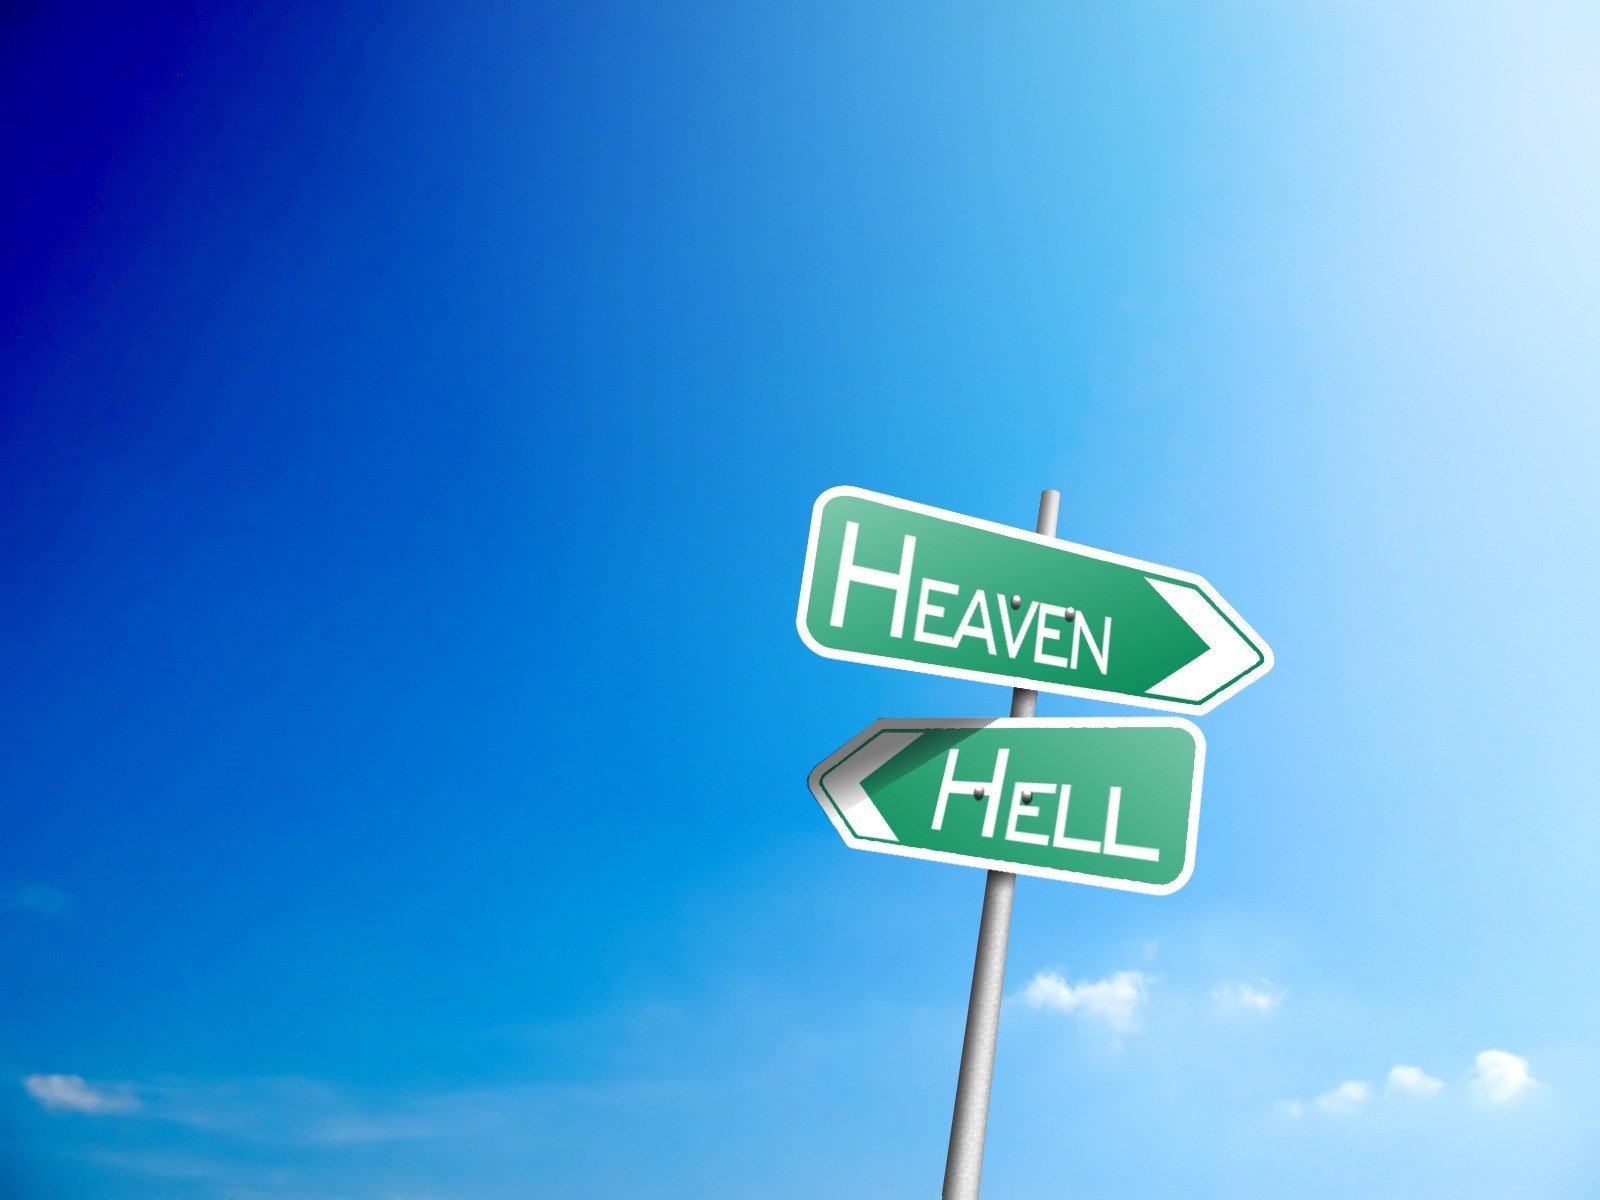 Wallpaper - Heaven And Hell - HD Wallpaper 